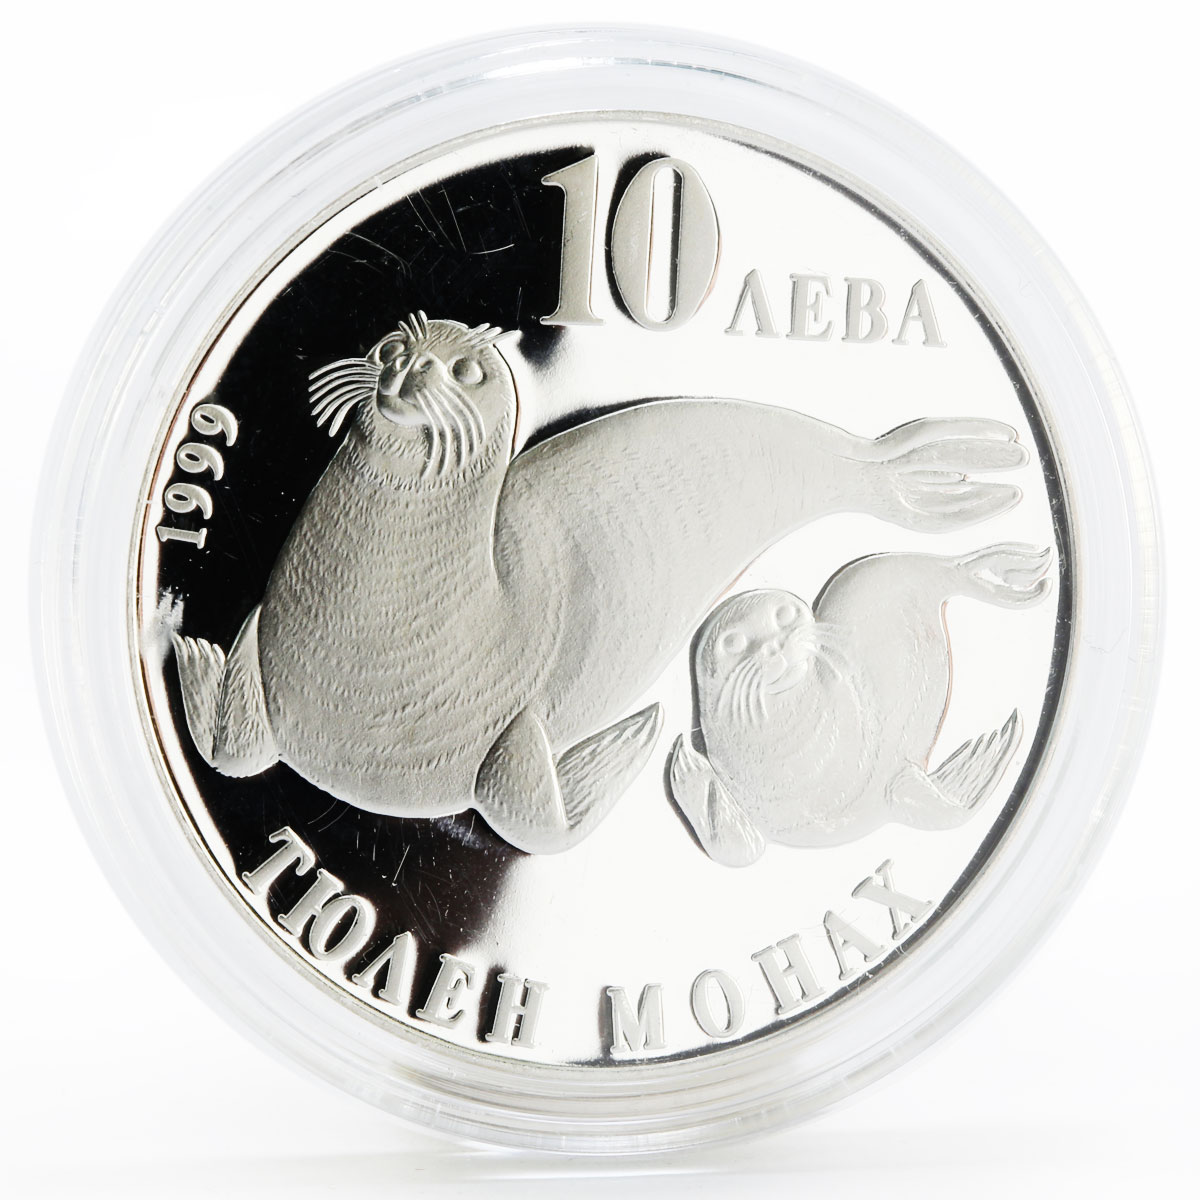 Bulgaria 10 leva Endangered Wild Animals series Monk Seal proof silver coin 1999